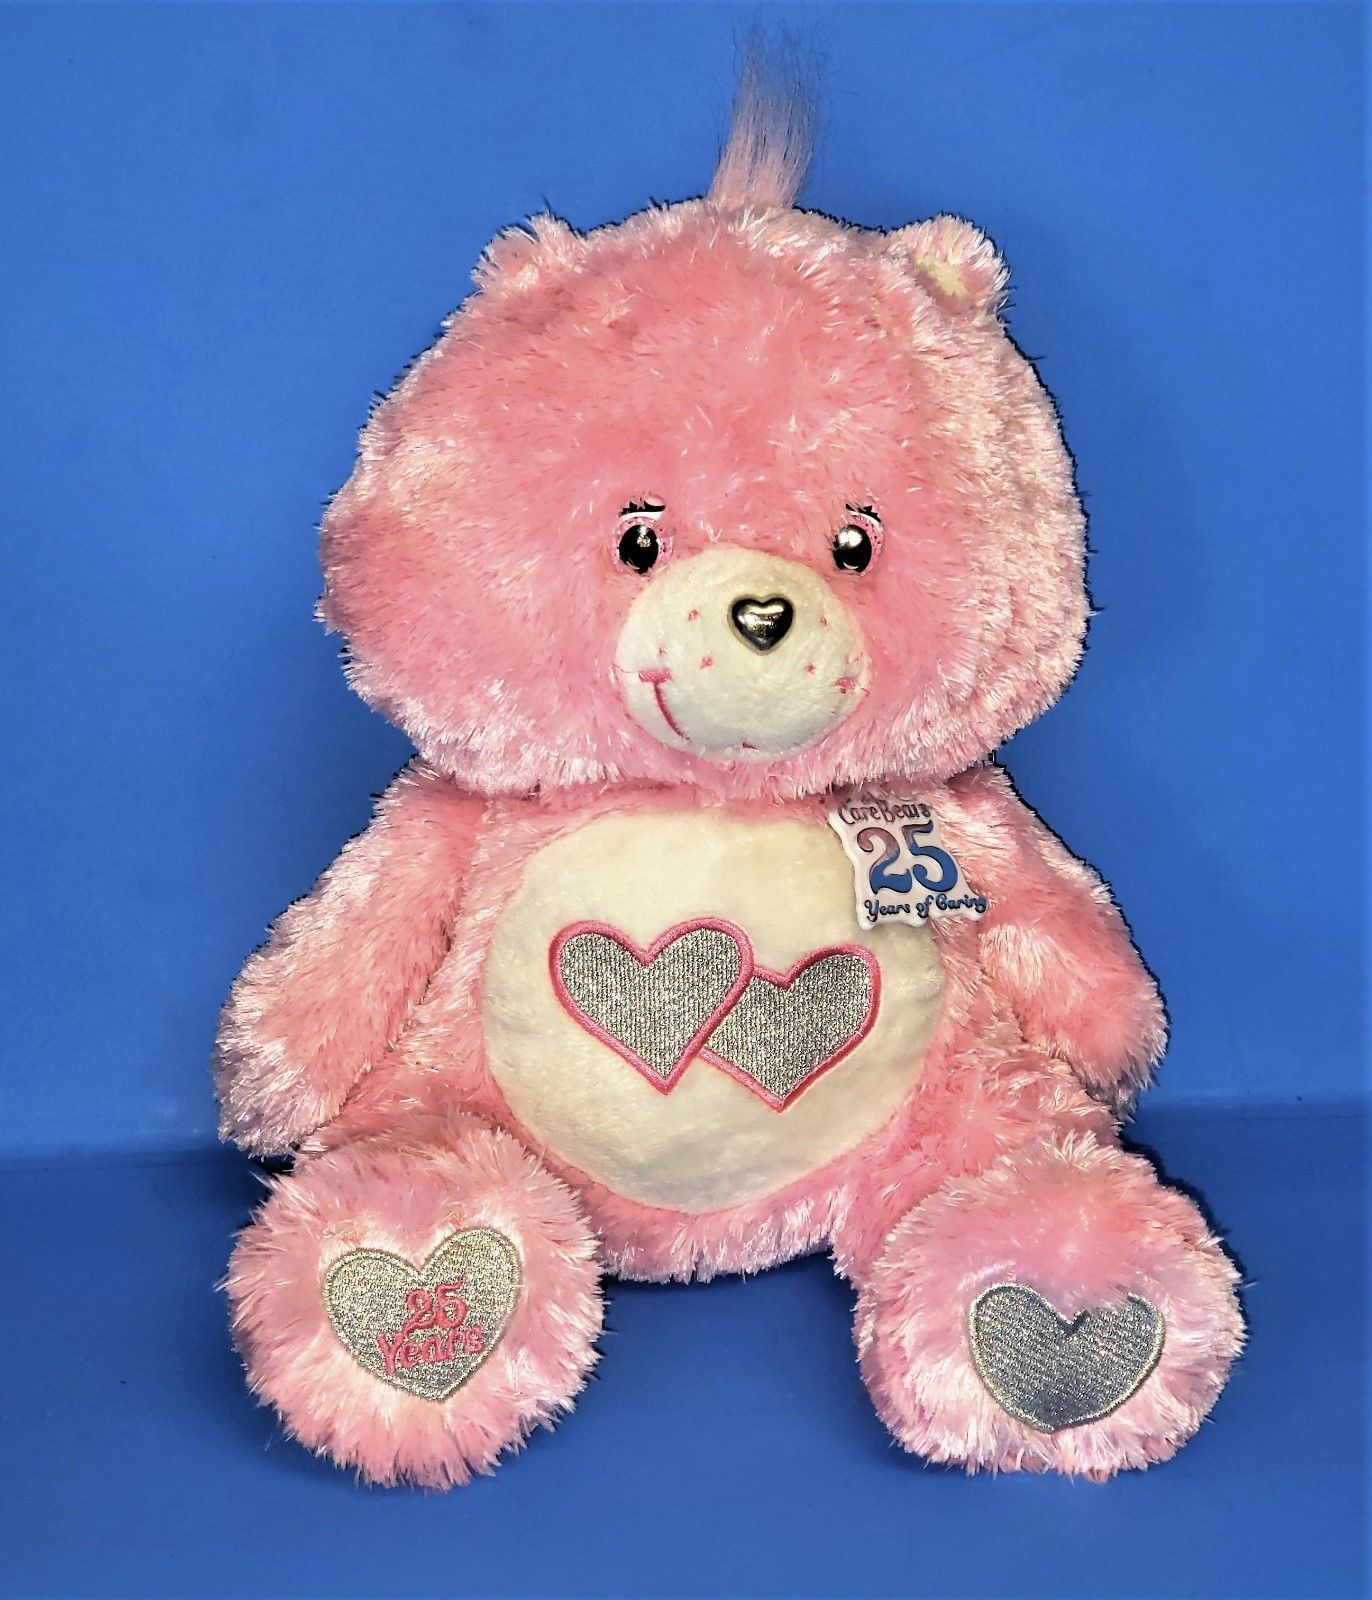 Care Bears Plush Pink 25 Years of Caring Anniversary Swarovski Crystal Eyes 13